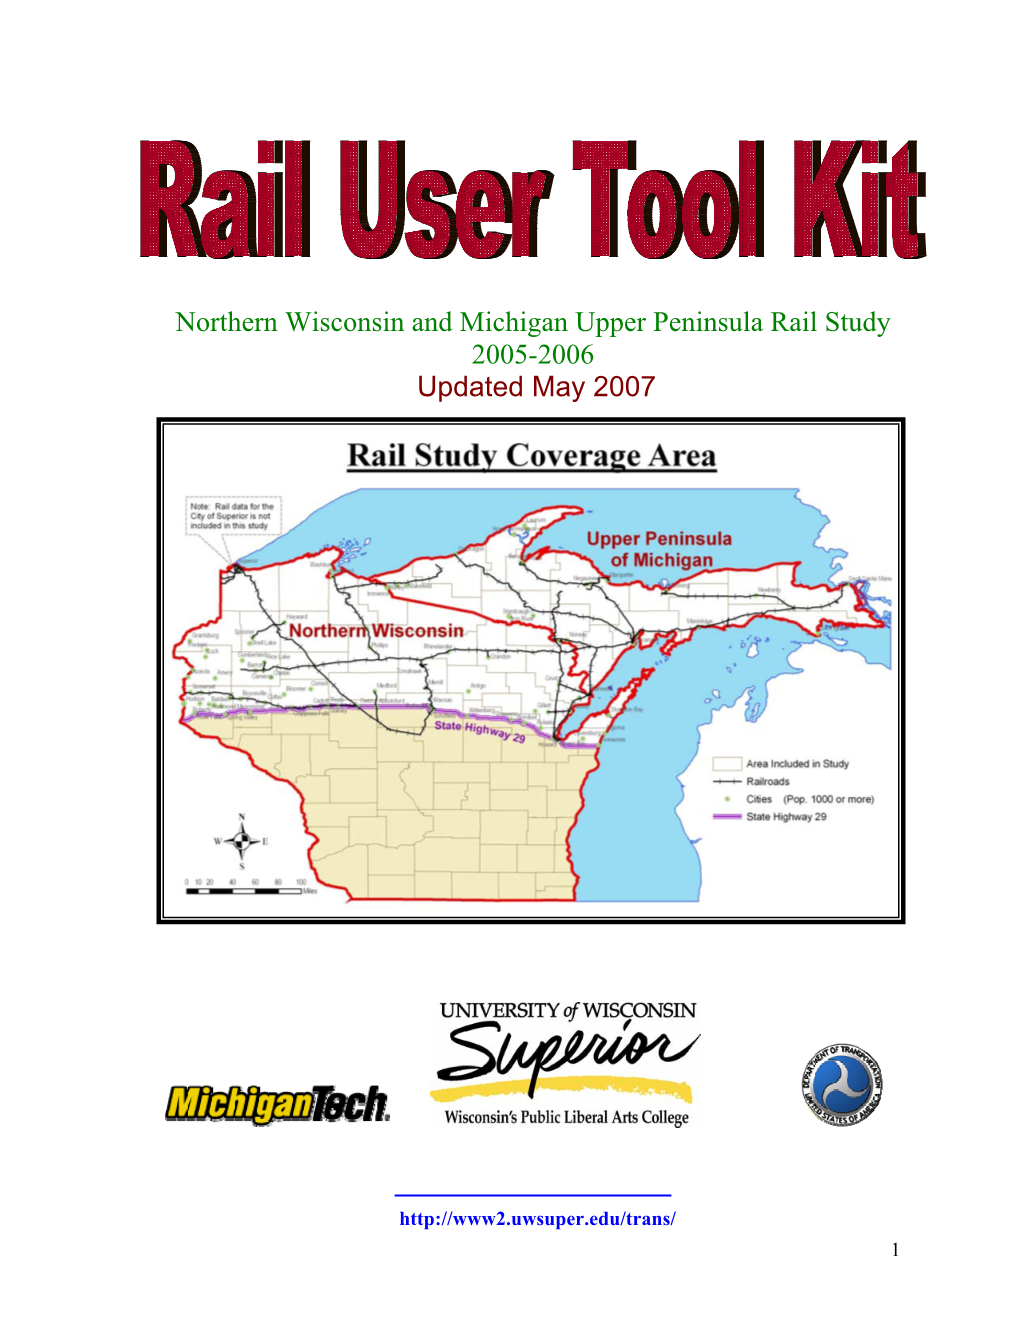 Northern Wisconsin and Michigan Upper Peninsula Rail Study 2005-2006 Updated May 2007